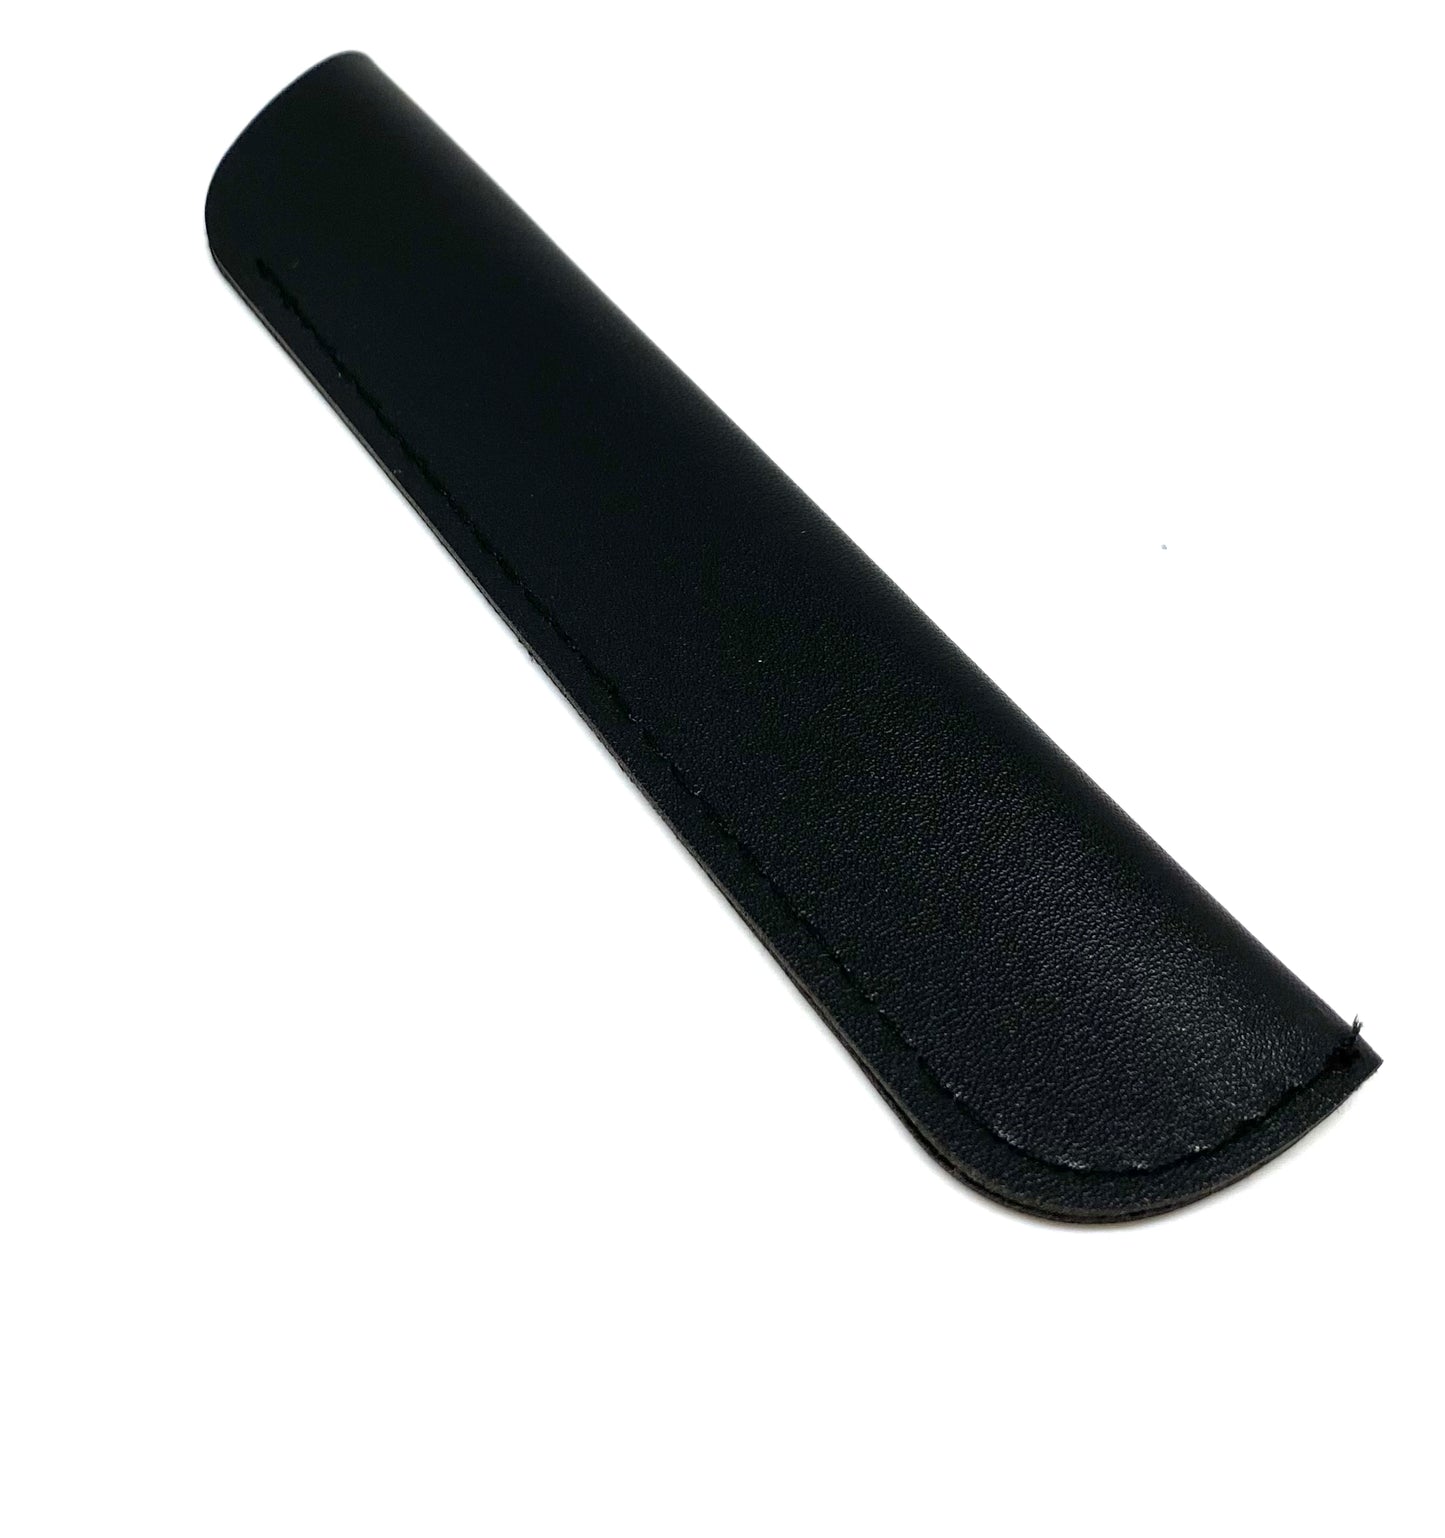 PU Leather pen sleeve